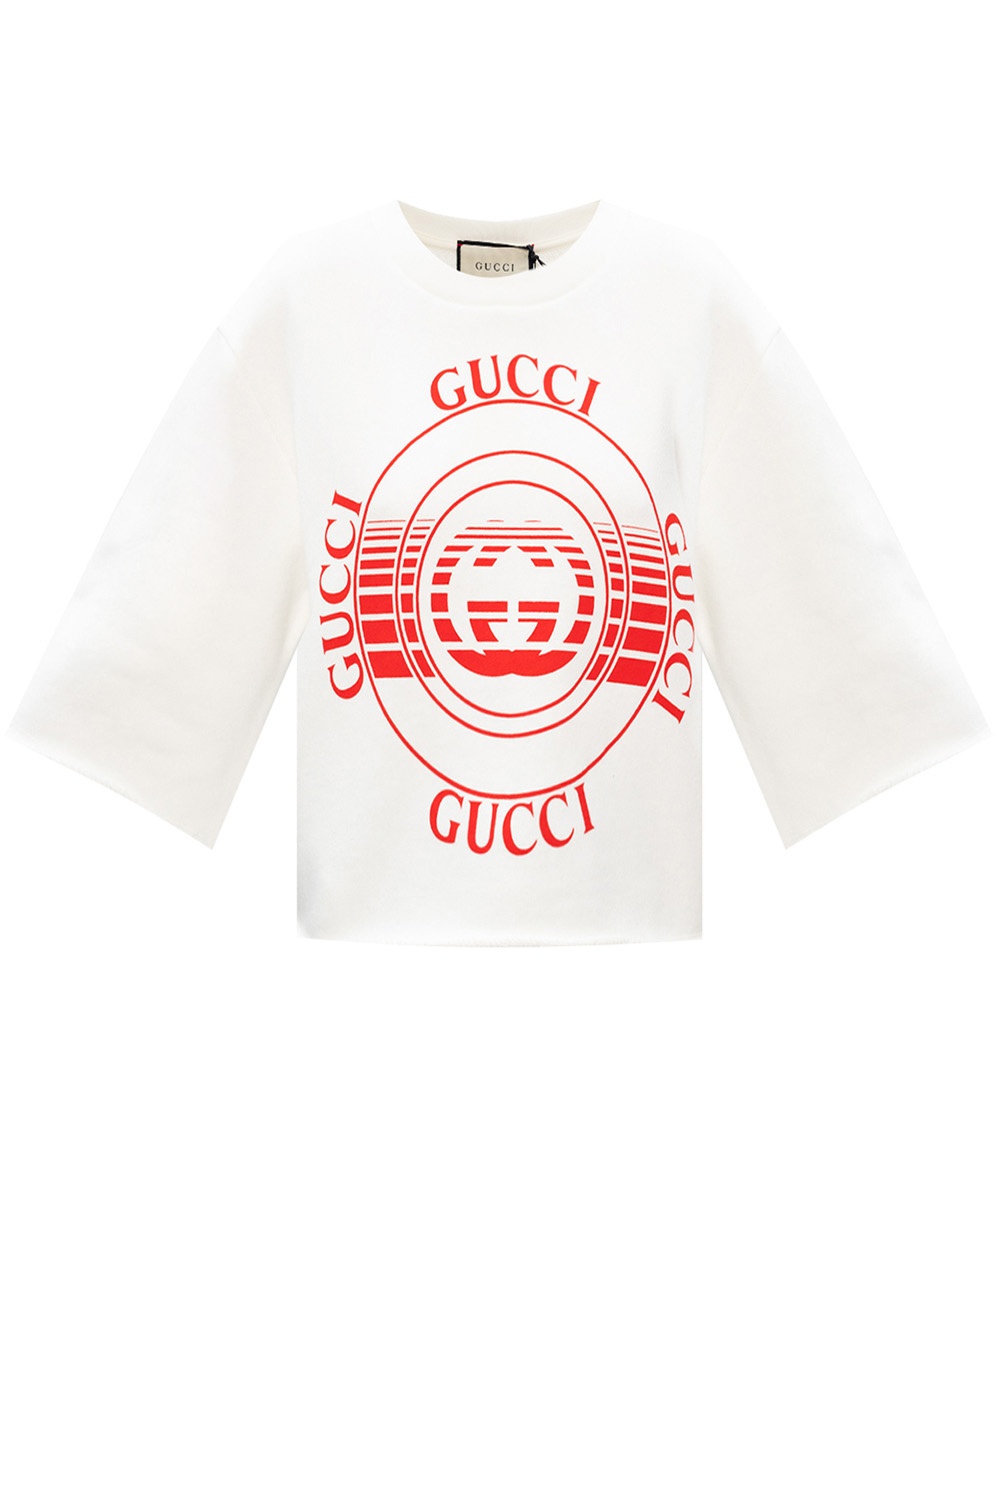 gucci cropped sweatshirt